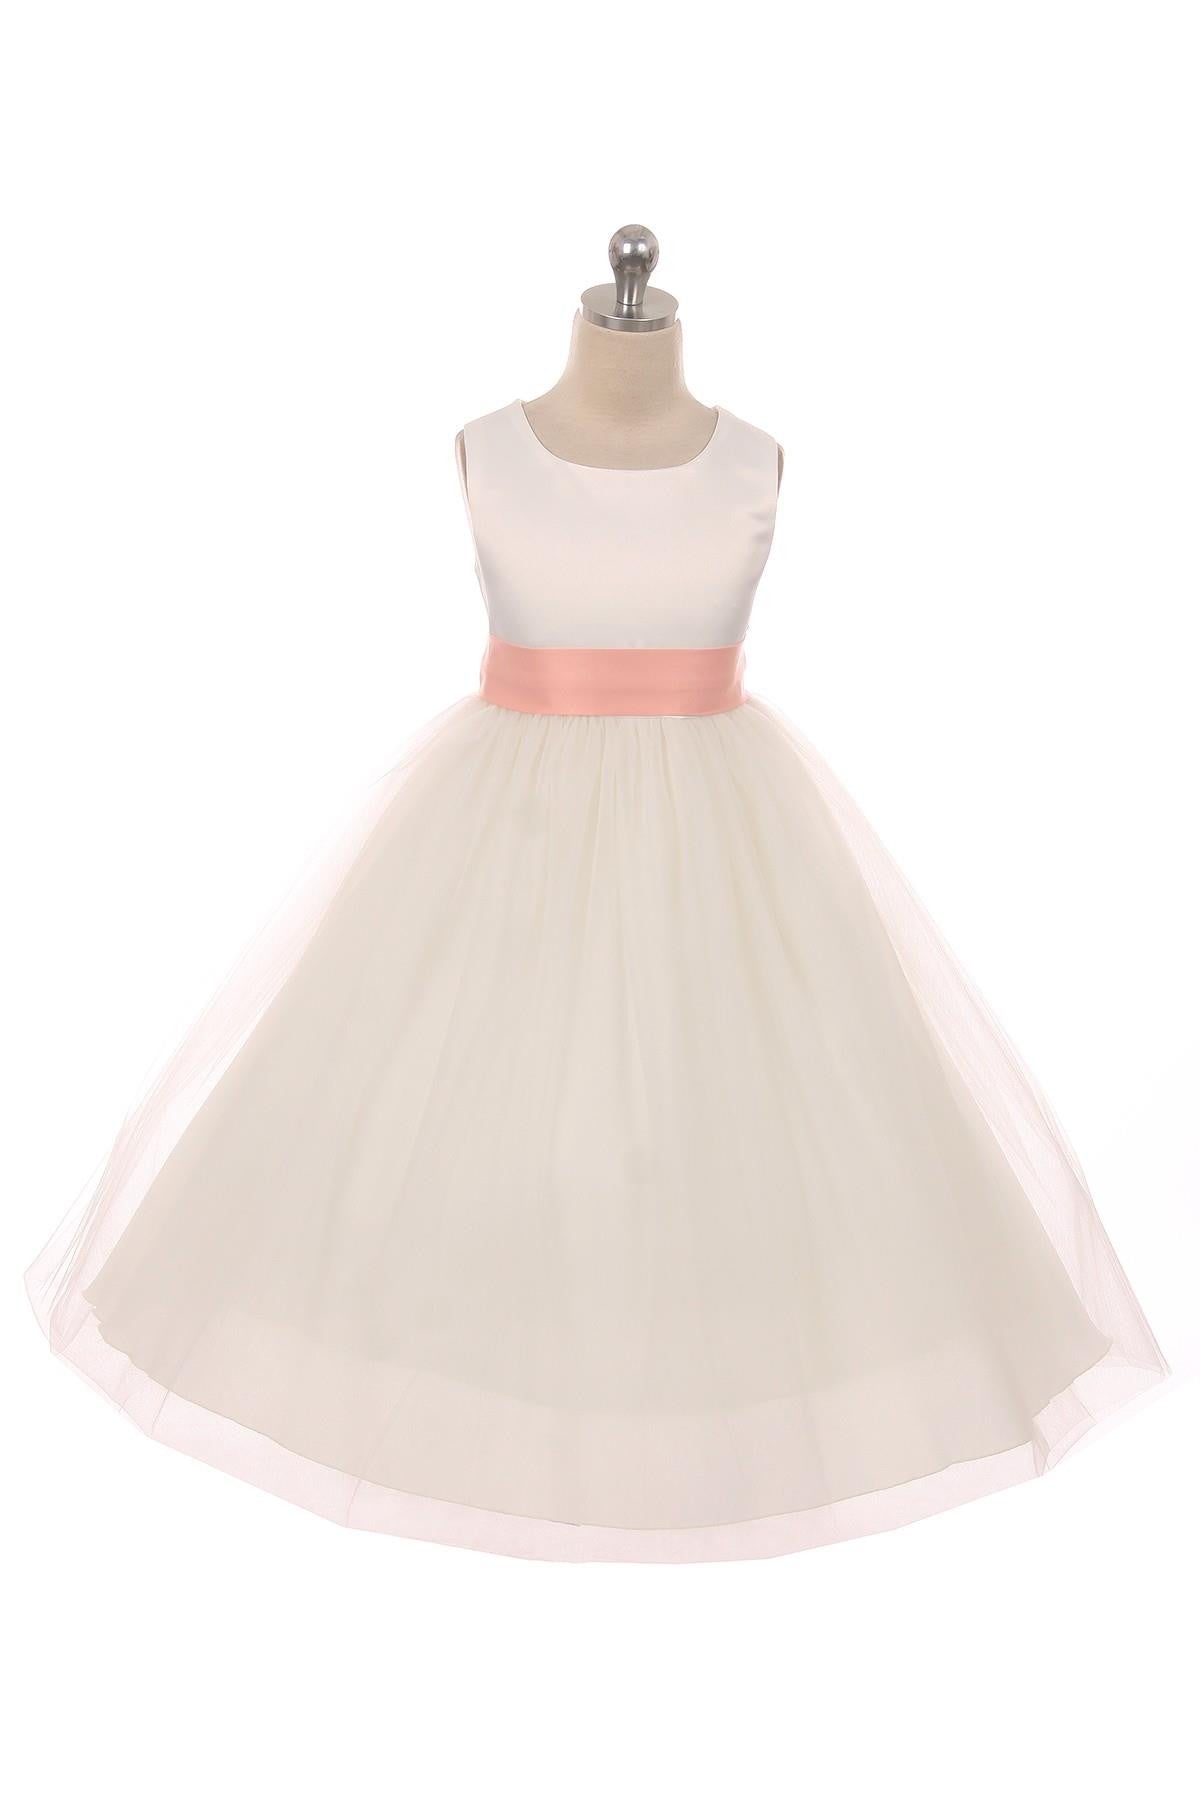 Premade Satin Bow Girls Dress - White Dress